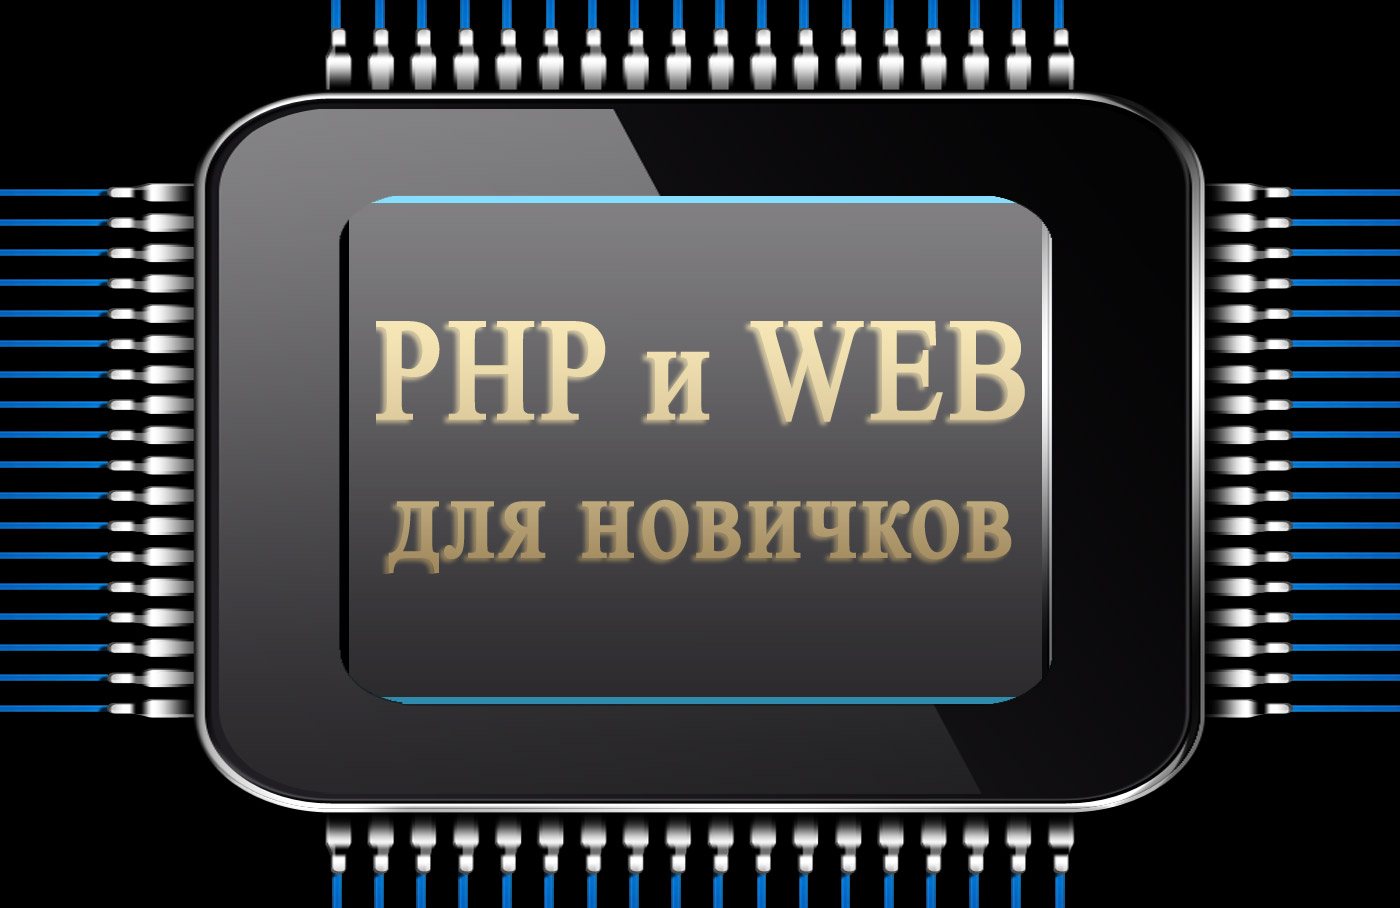 PHP  WEB  